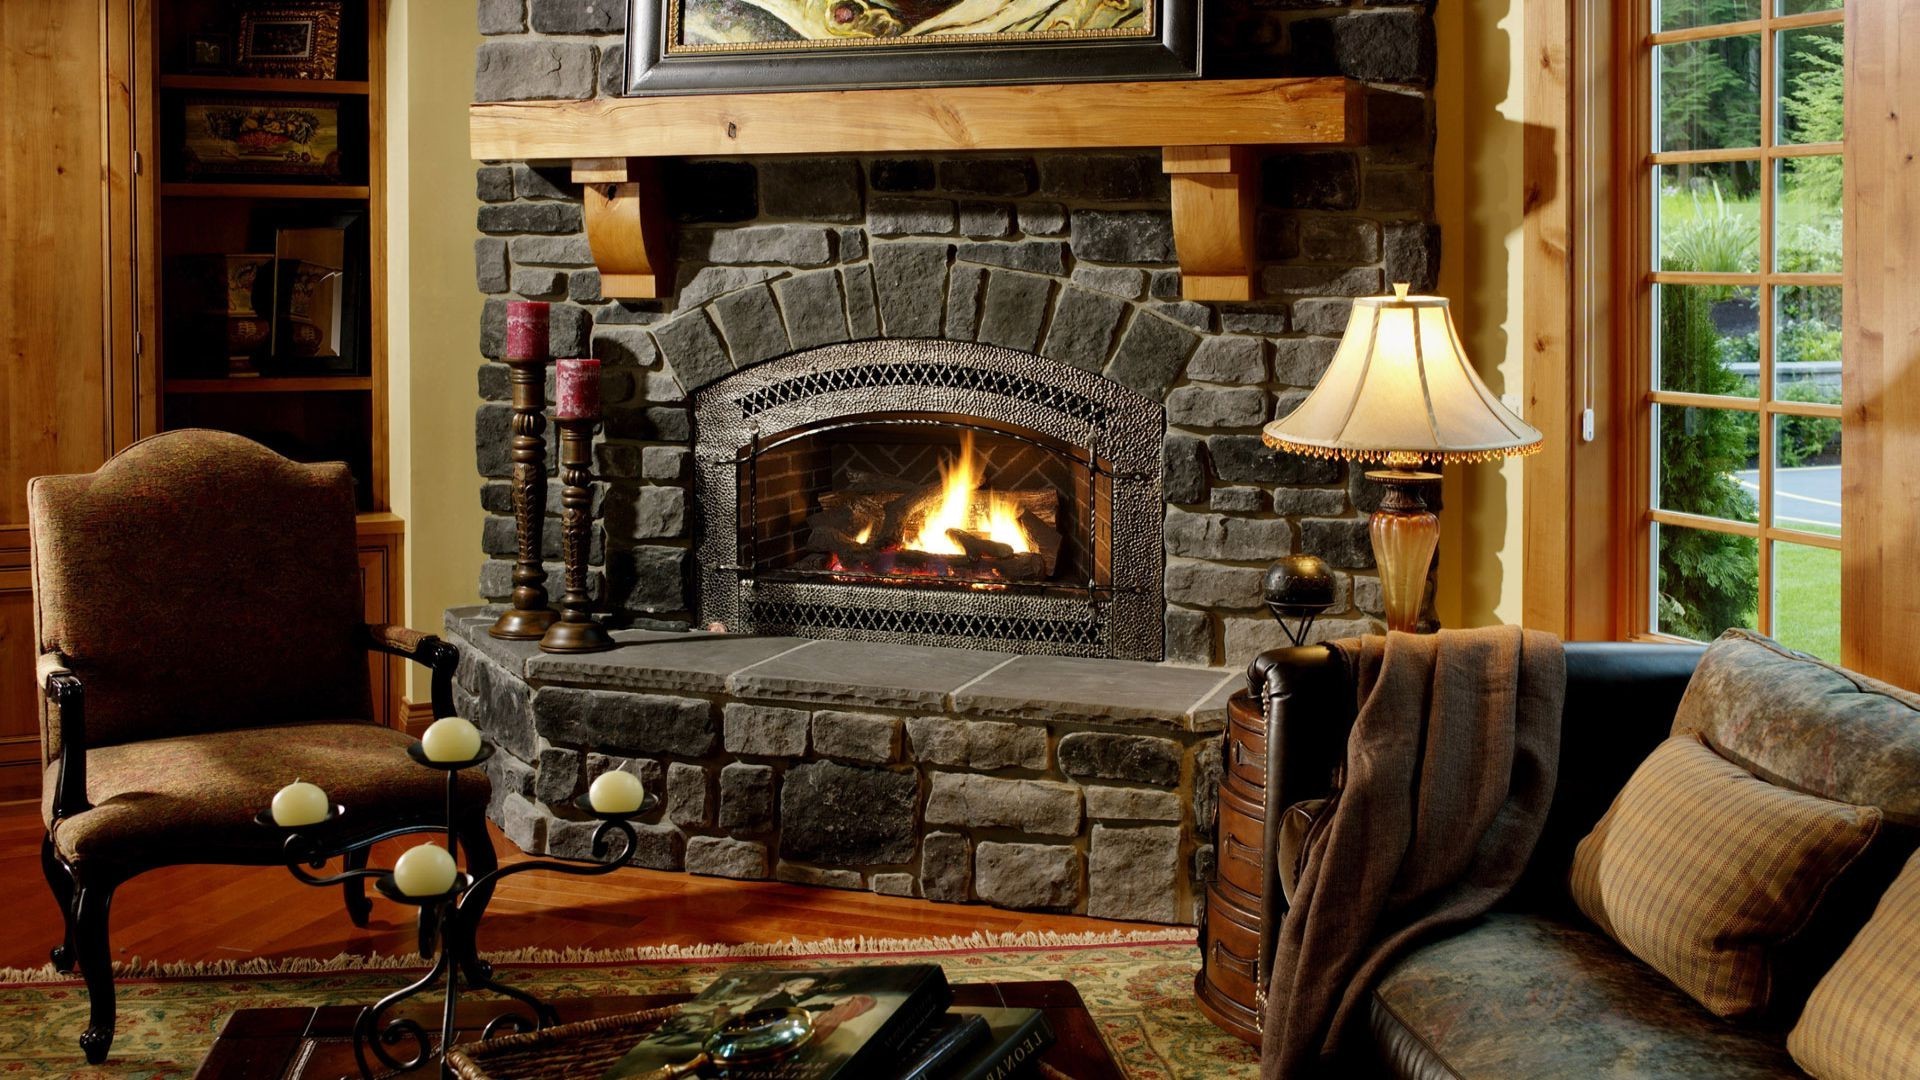  Fireplace  wallpaper   Download free stunning HD 